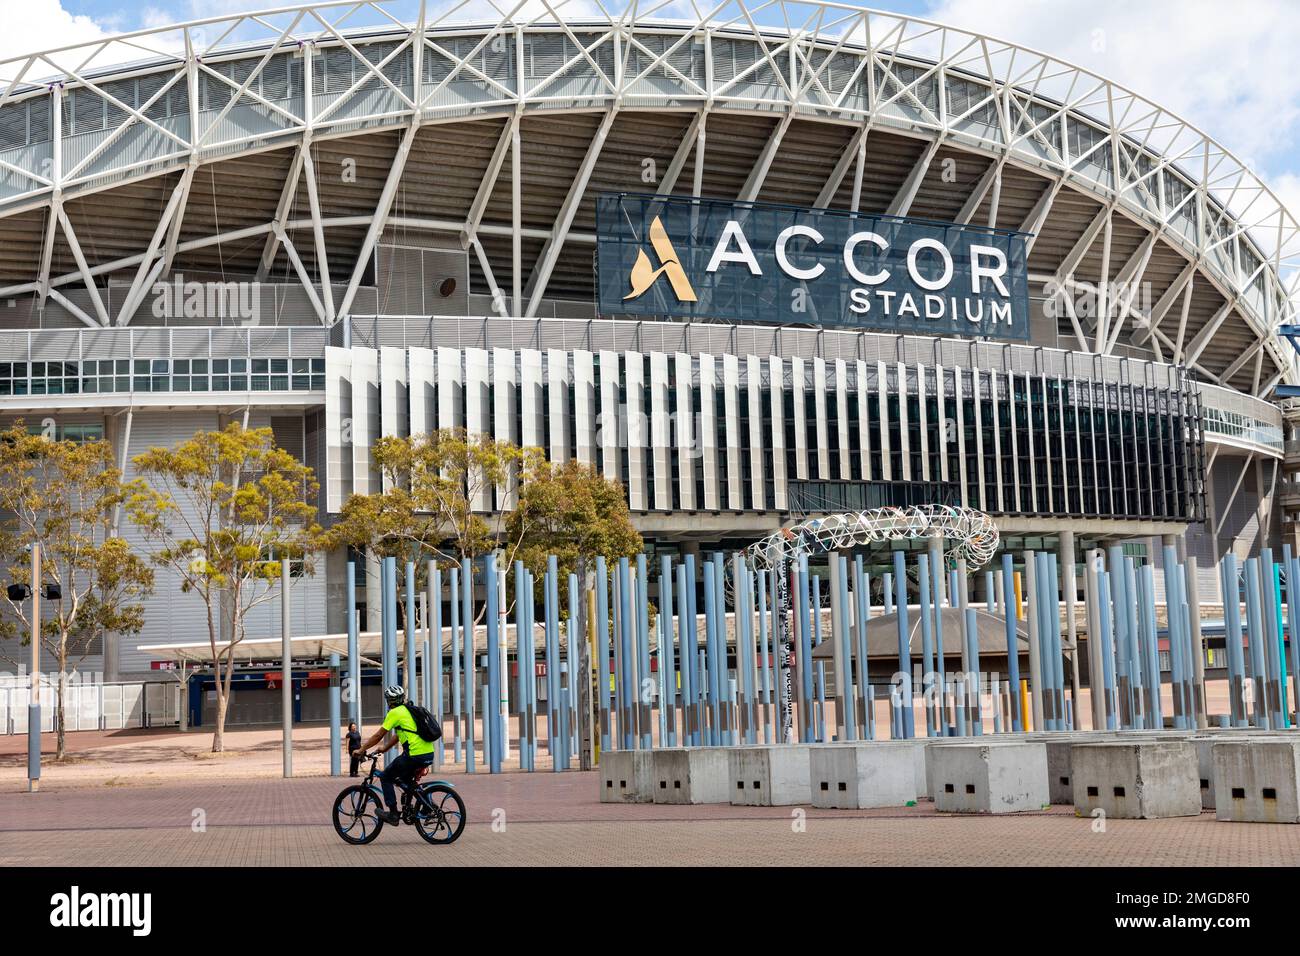 Stadium Australia, Olympic stadium in Sydney Olympic Park, now known as Accor Stadium, stadium is owned by NSW Government, Sydney,NSW,Australia Stock Photo